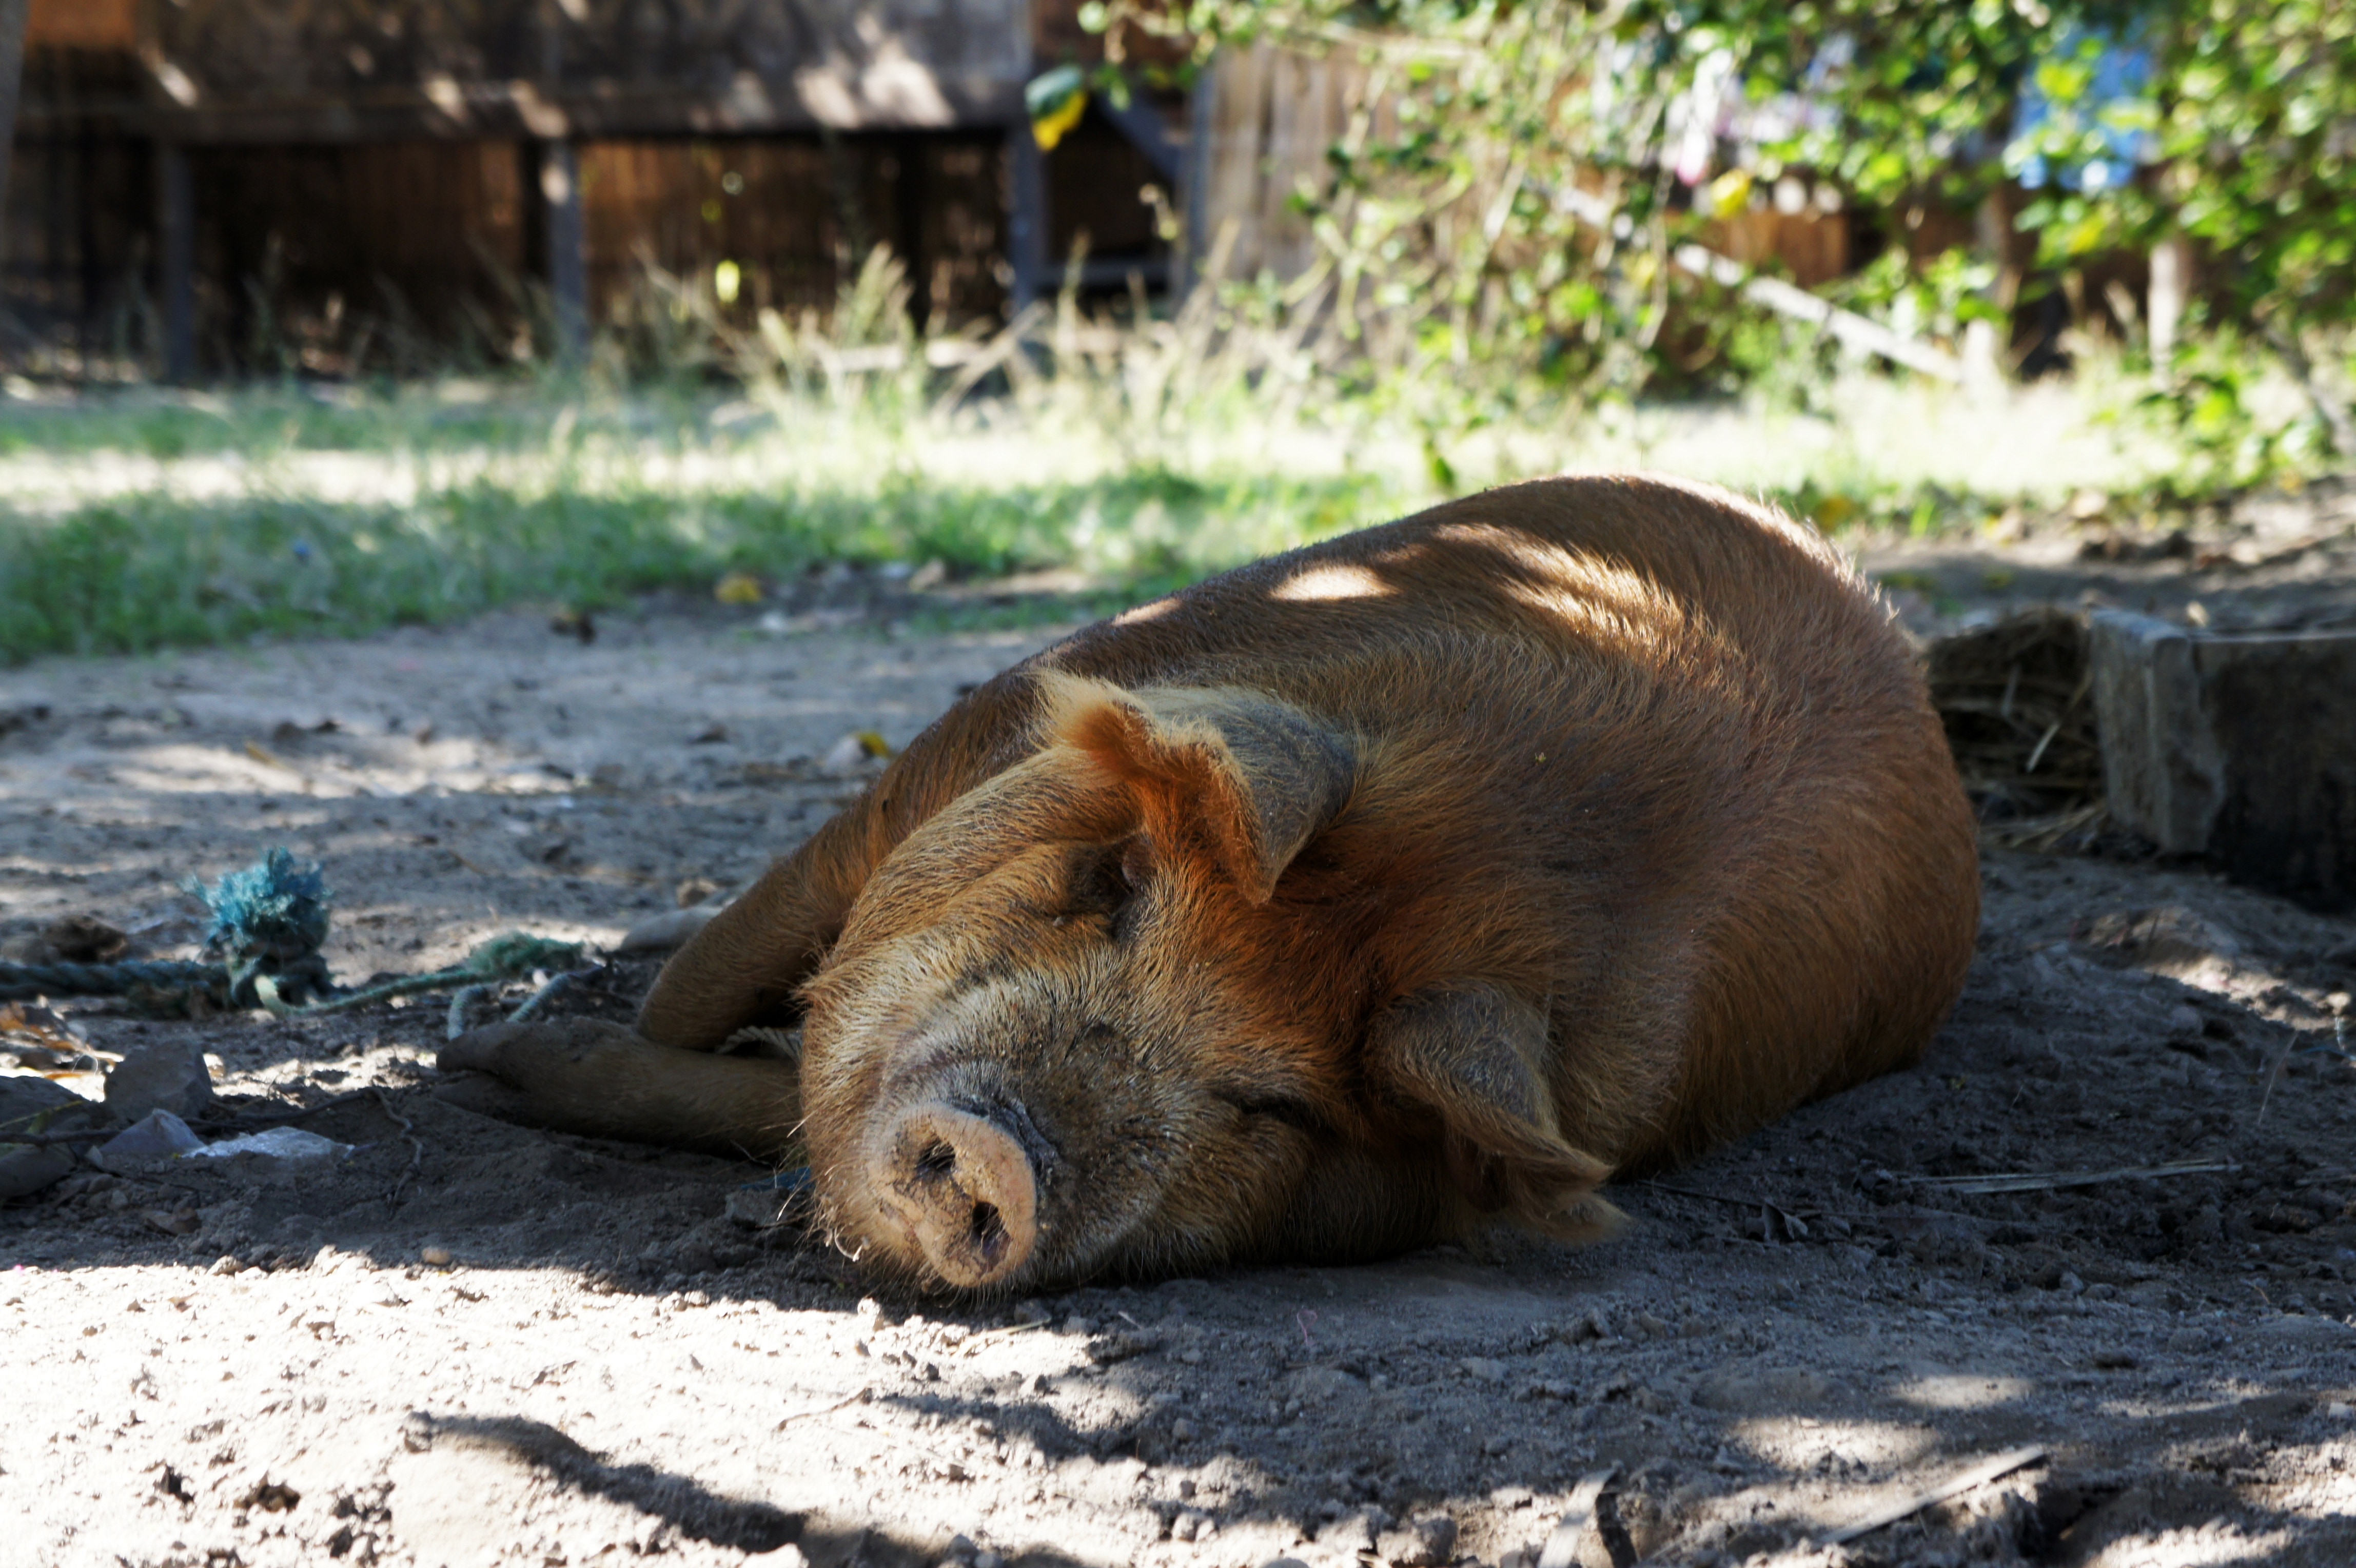 Concerns, Shadow, Happy, Pig, Happy Pig, sleeping, lying down